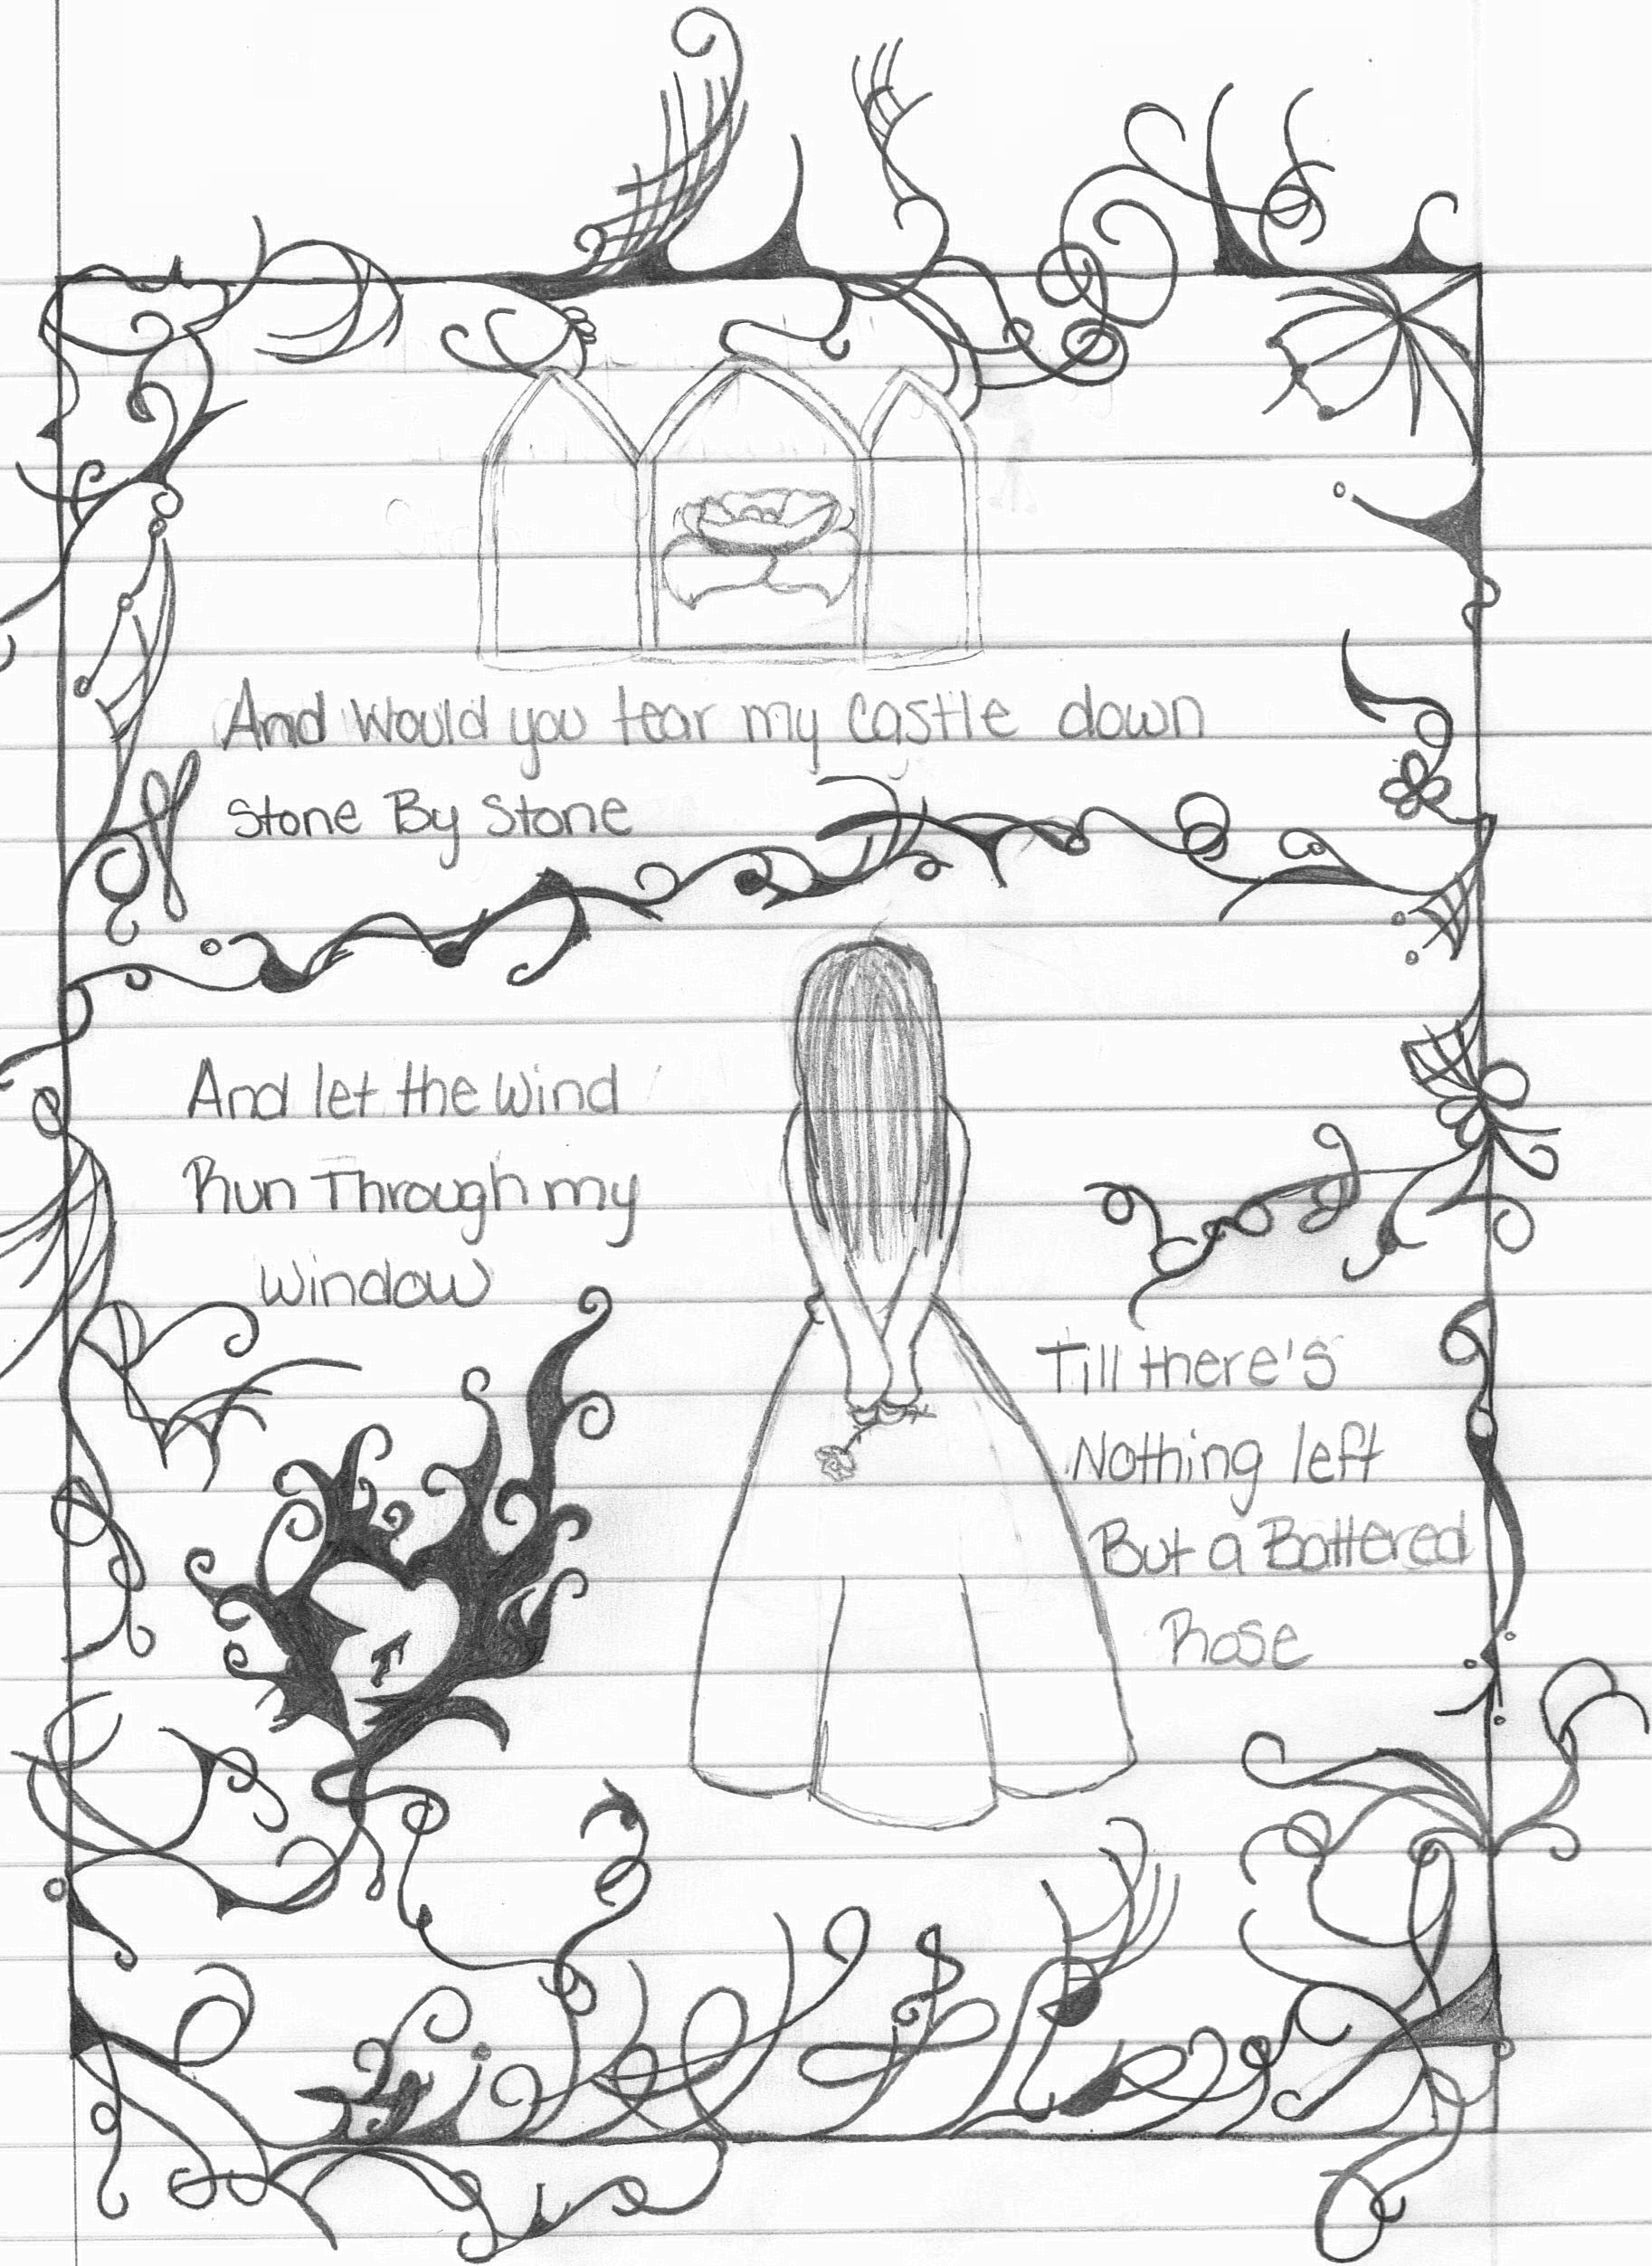 castle Down (lyrics by Emilie Autumn) by black_wolf87